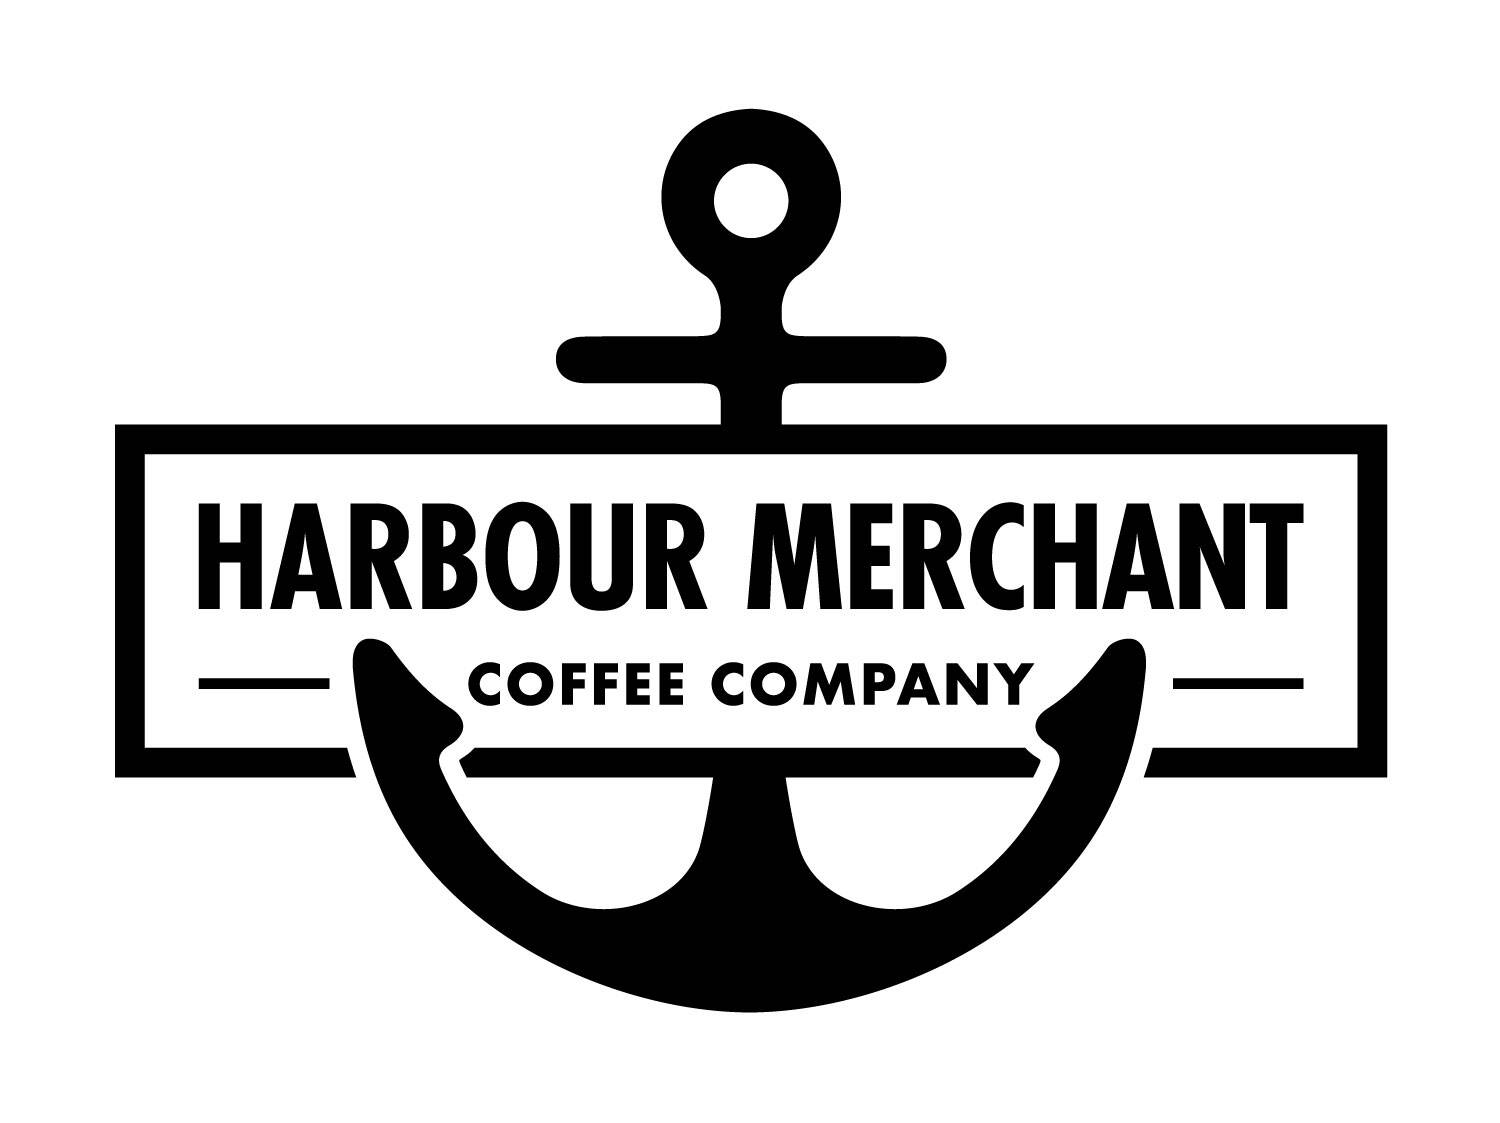 The Harbour Merchant Coffee Company Inc.